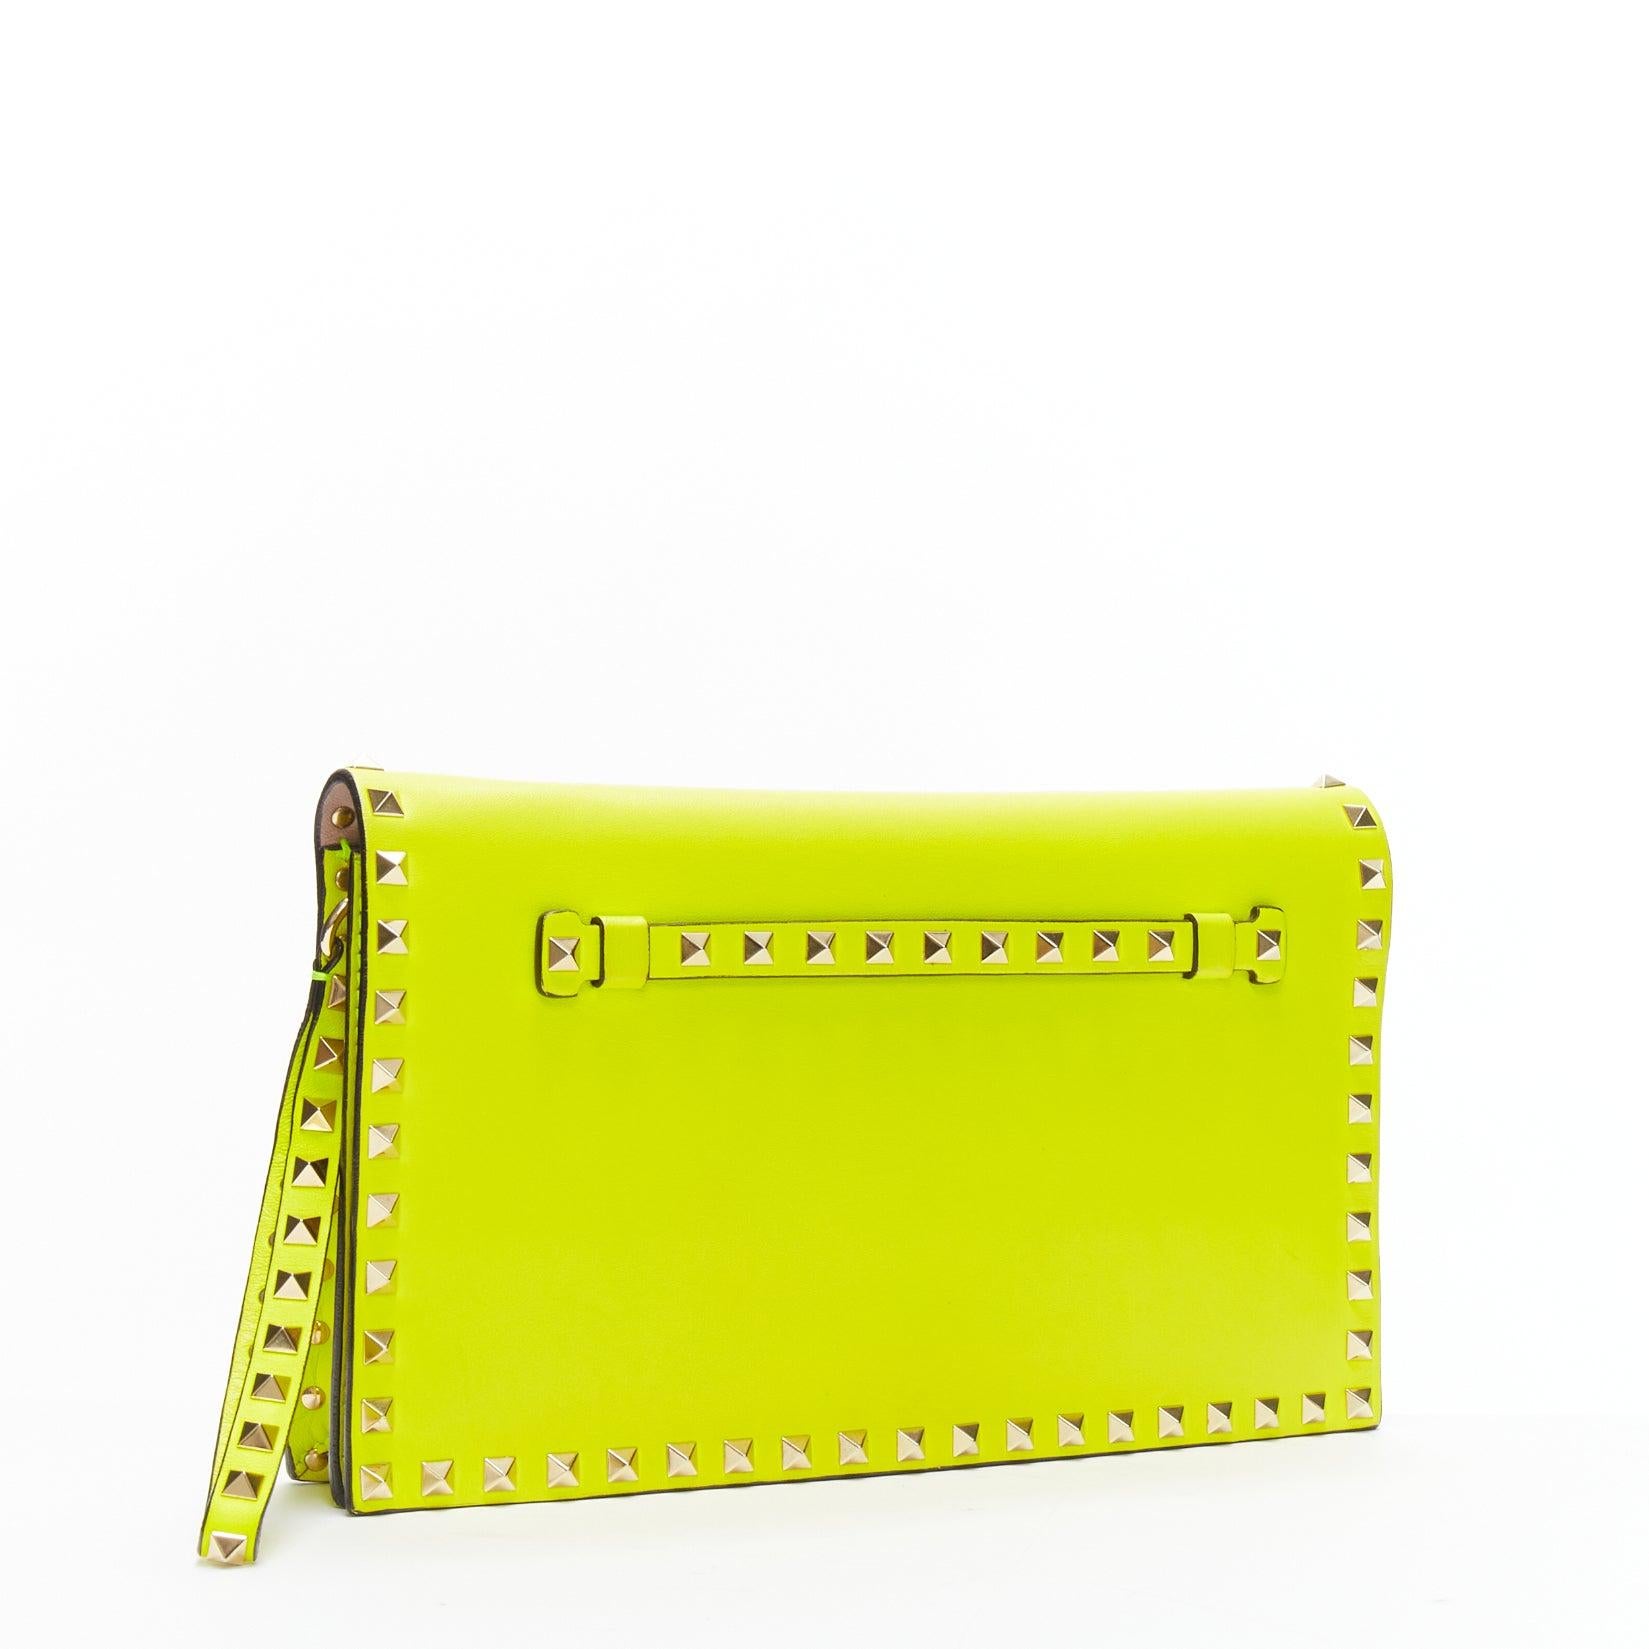 Women's VALENTINO Rockstud neon yellow studded leather flap wristlet clutch bag